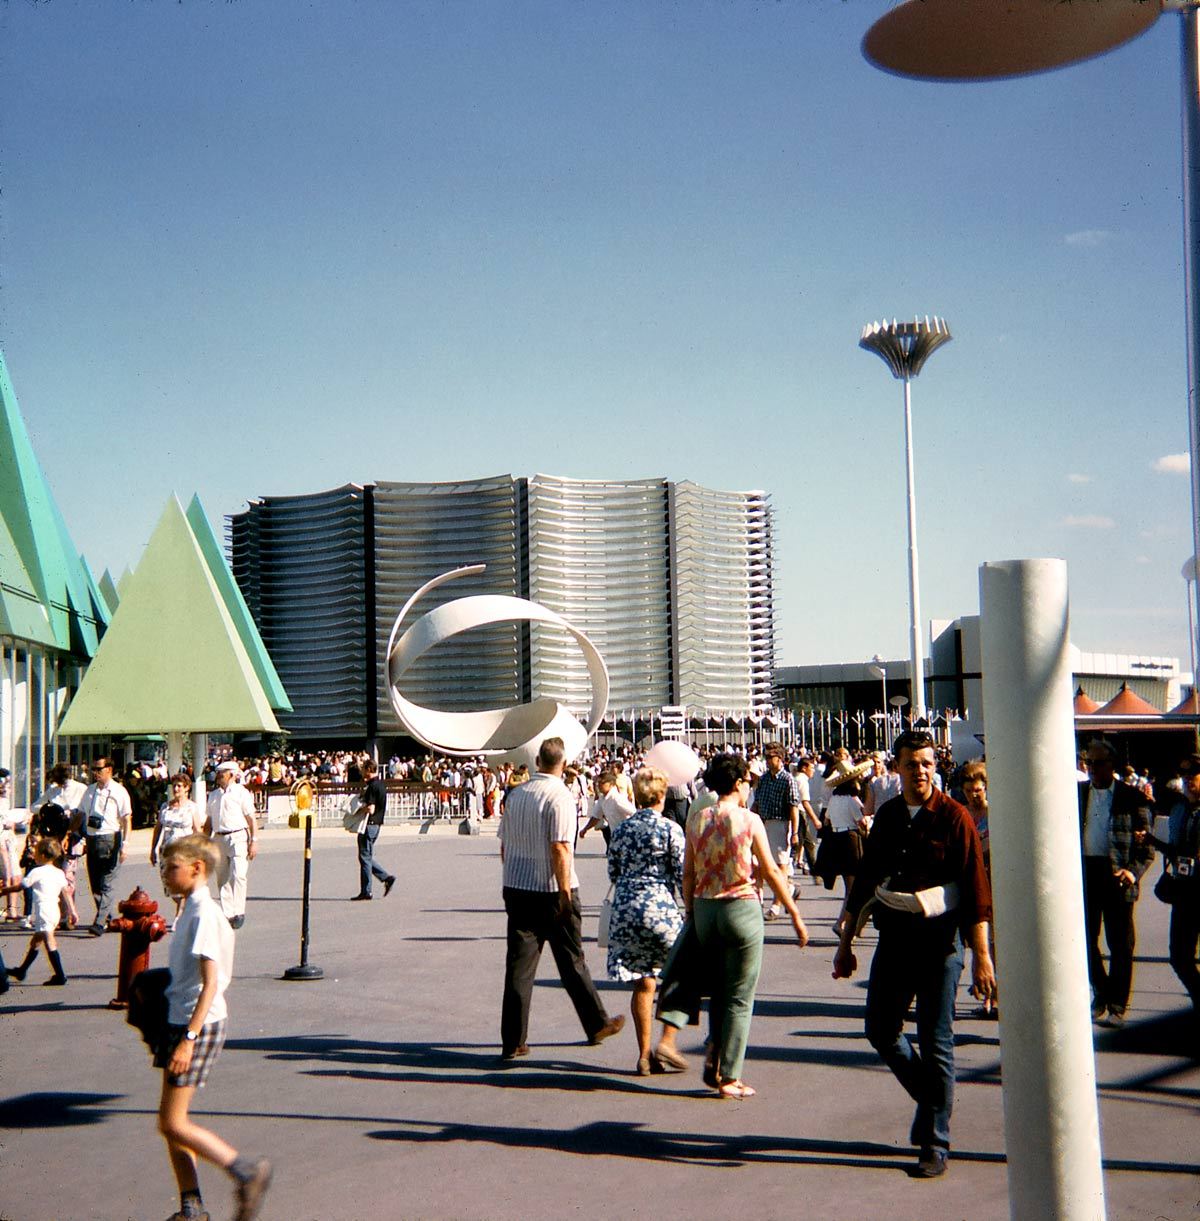 Expo 67